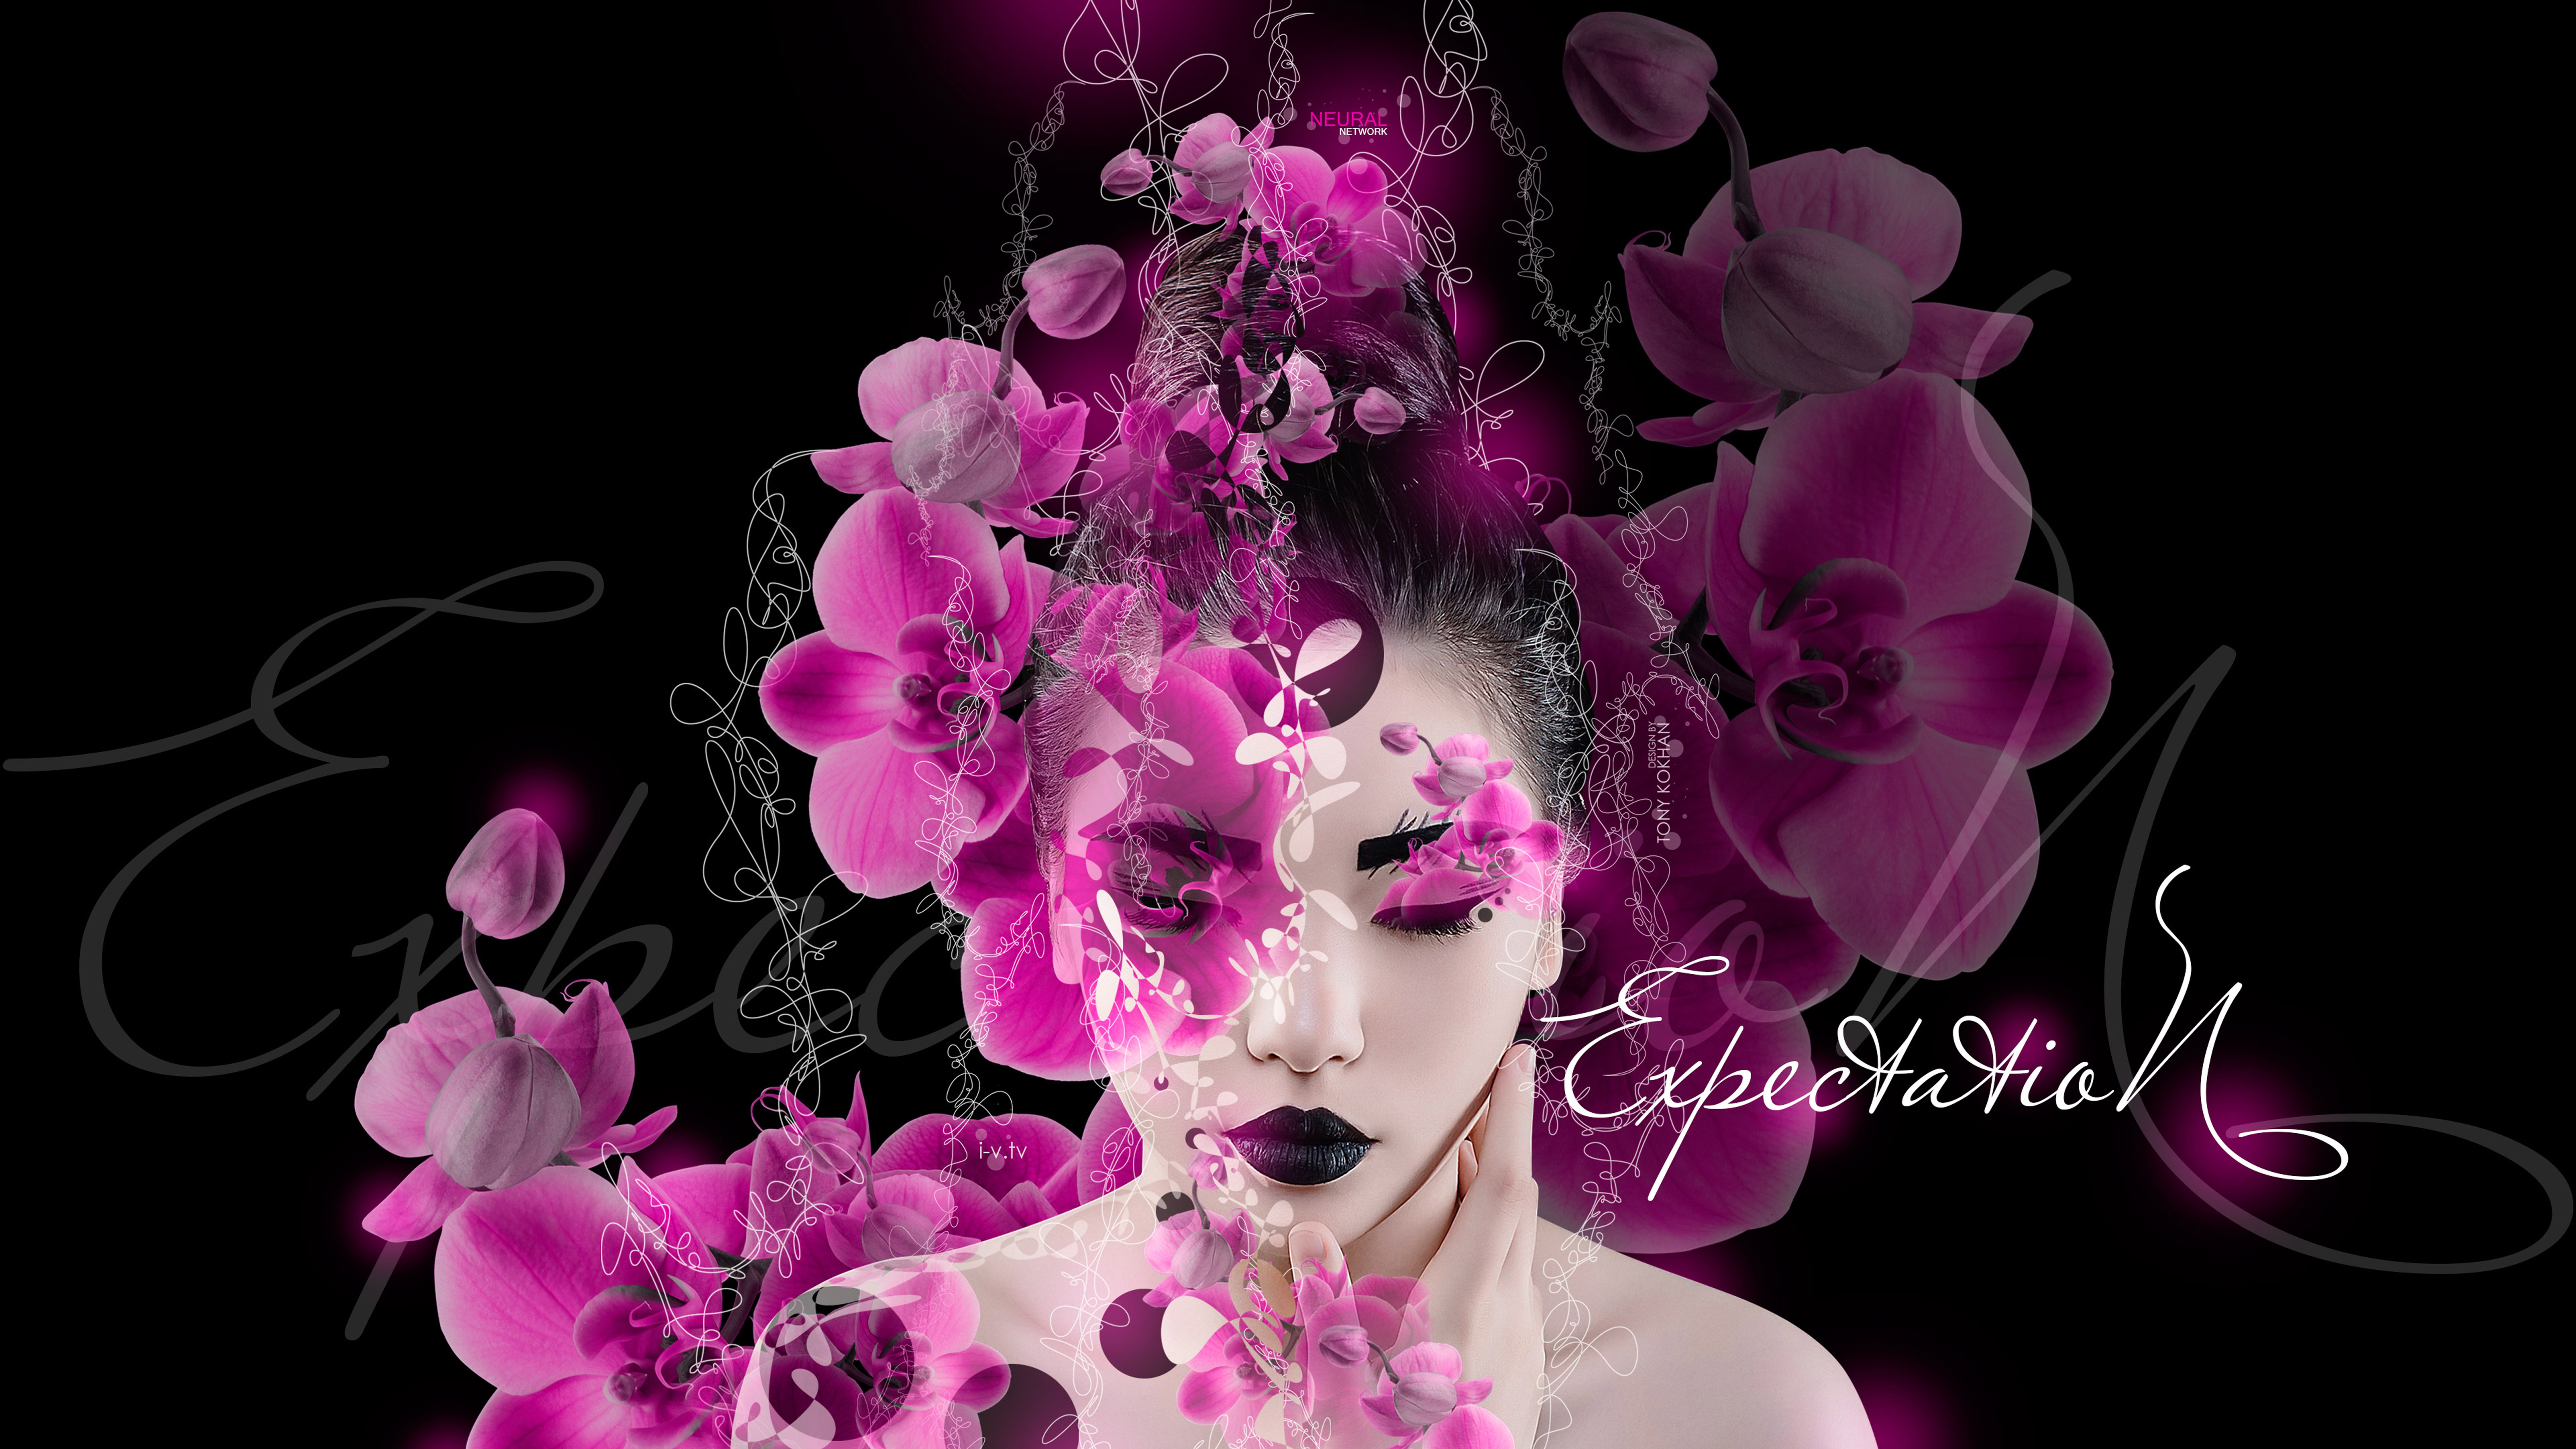 Expectation-Asian-Girl-Super-MakeUp-Neural-Network-TonyFlowers-Orchid-Art